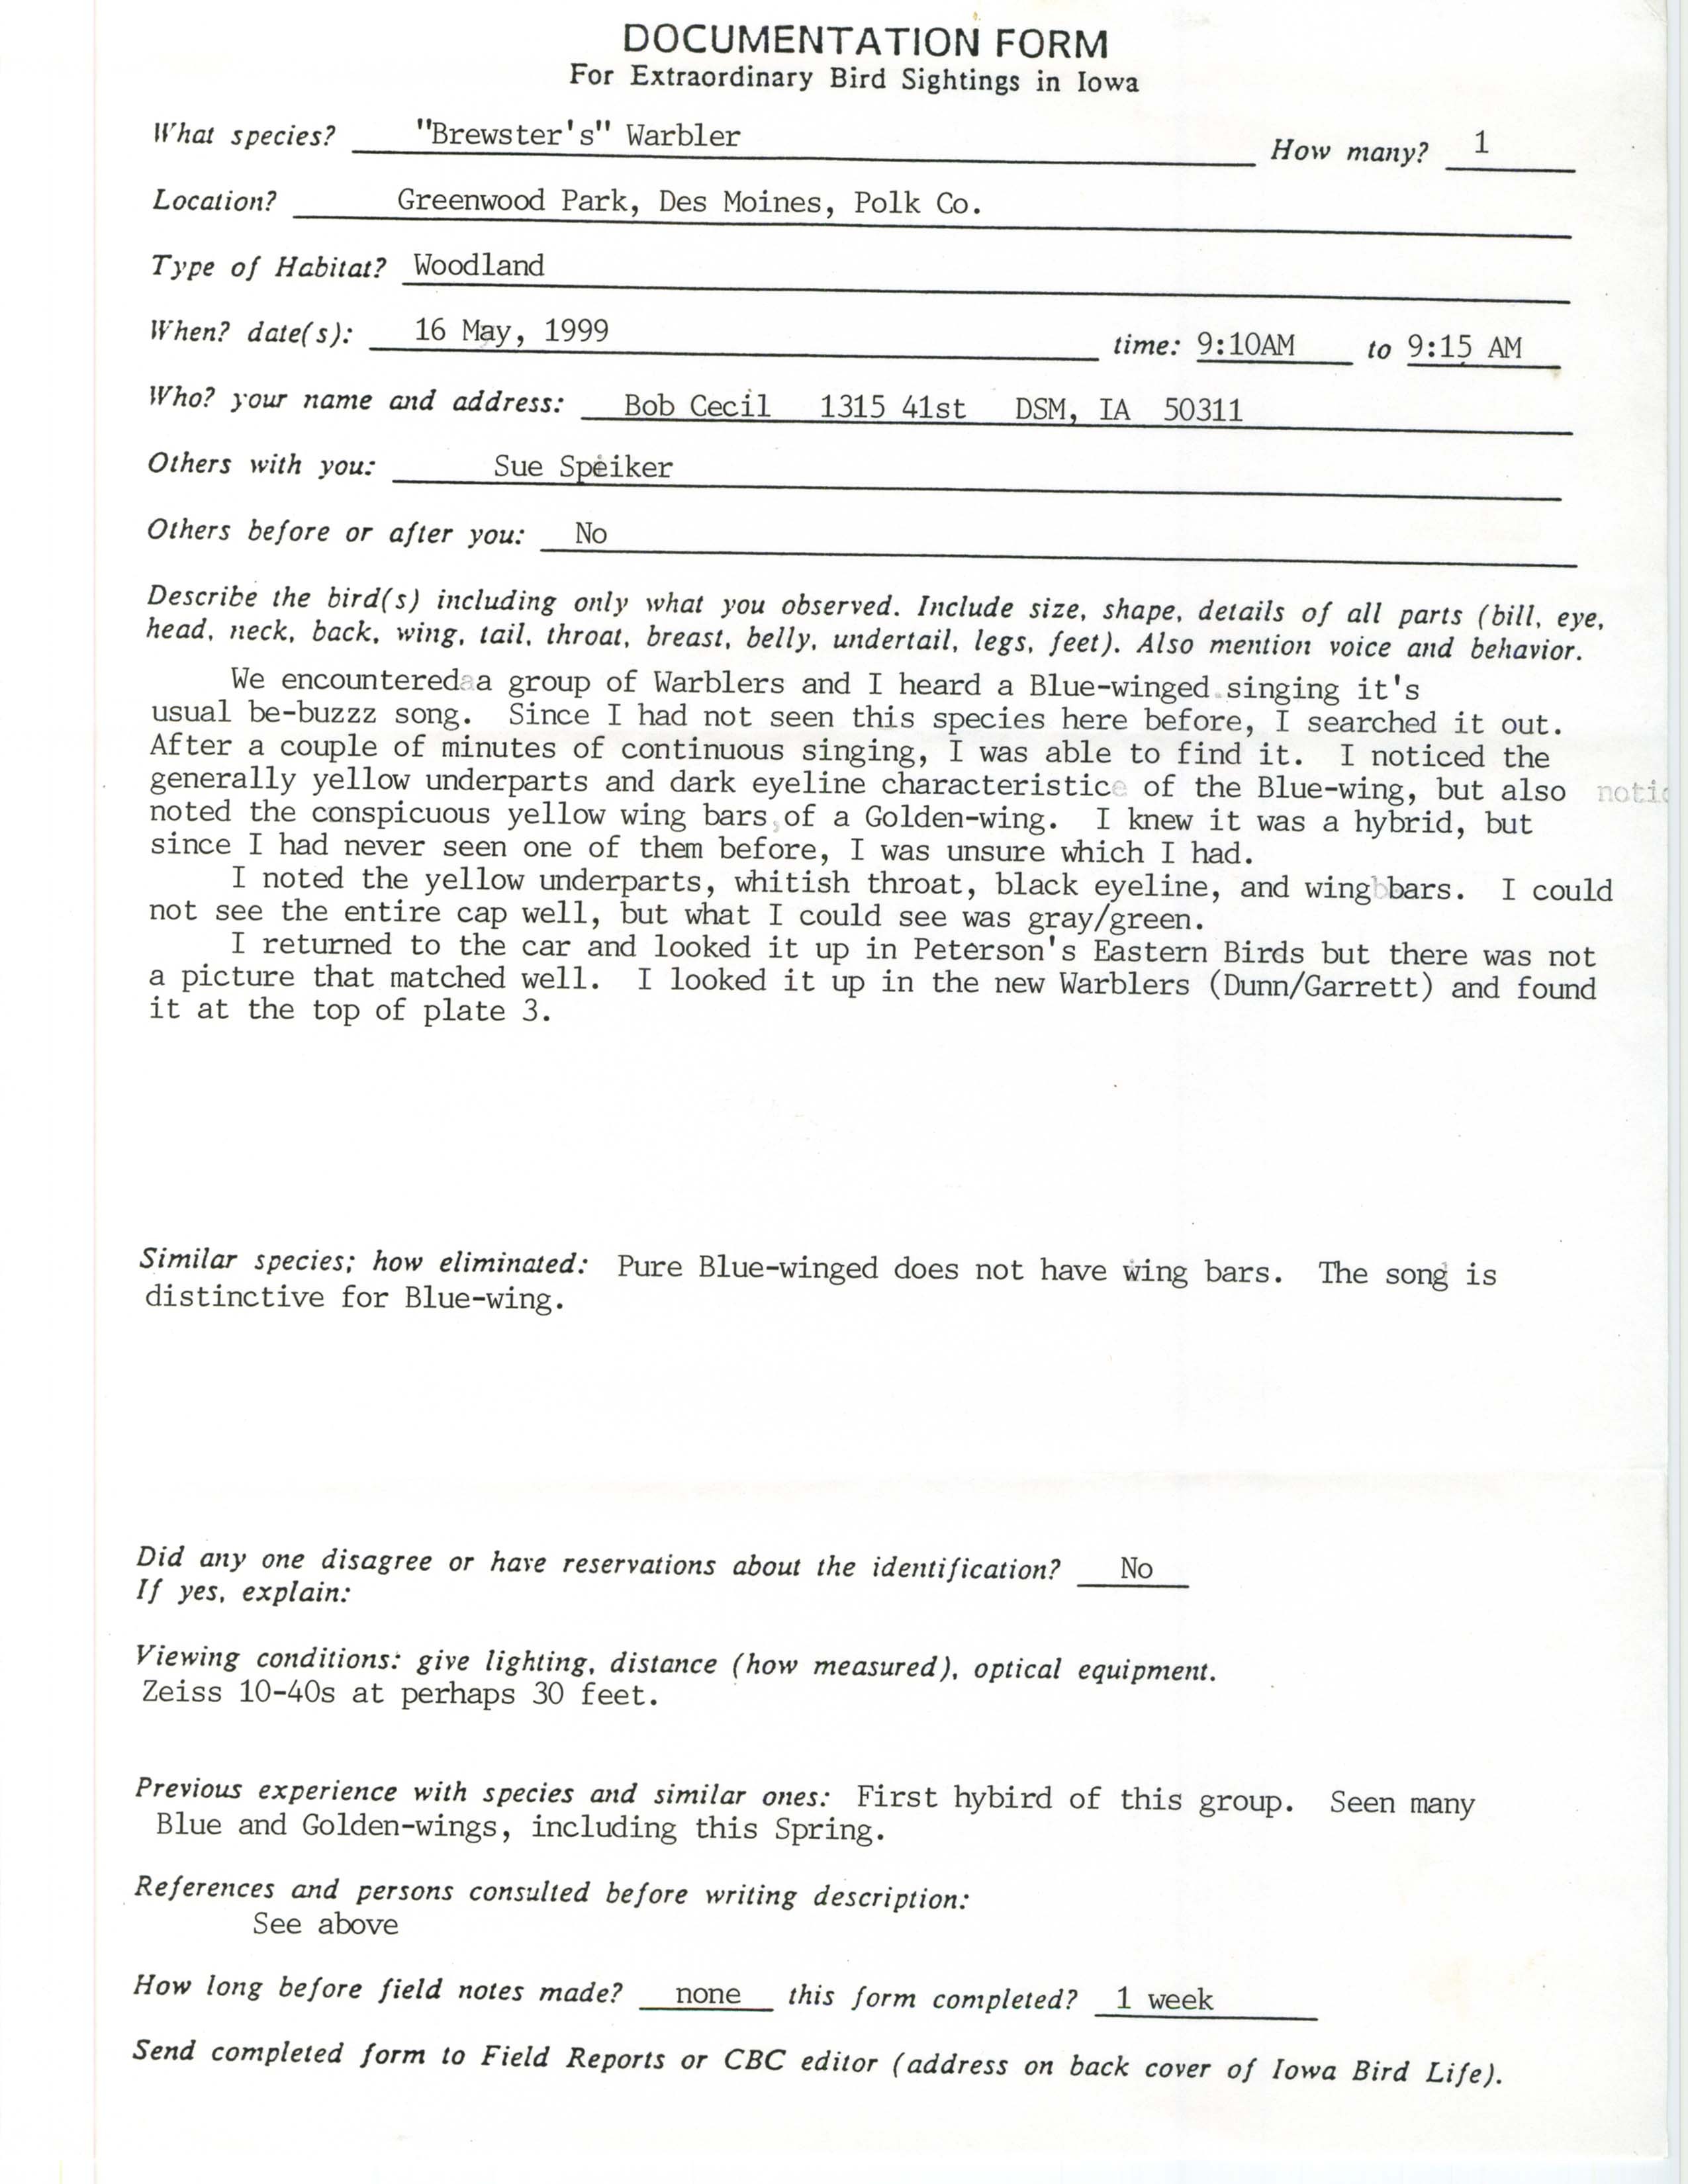 Rare bird documentation form for Bewster's Warbler at Greenwood Park in Des Moines, 1999